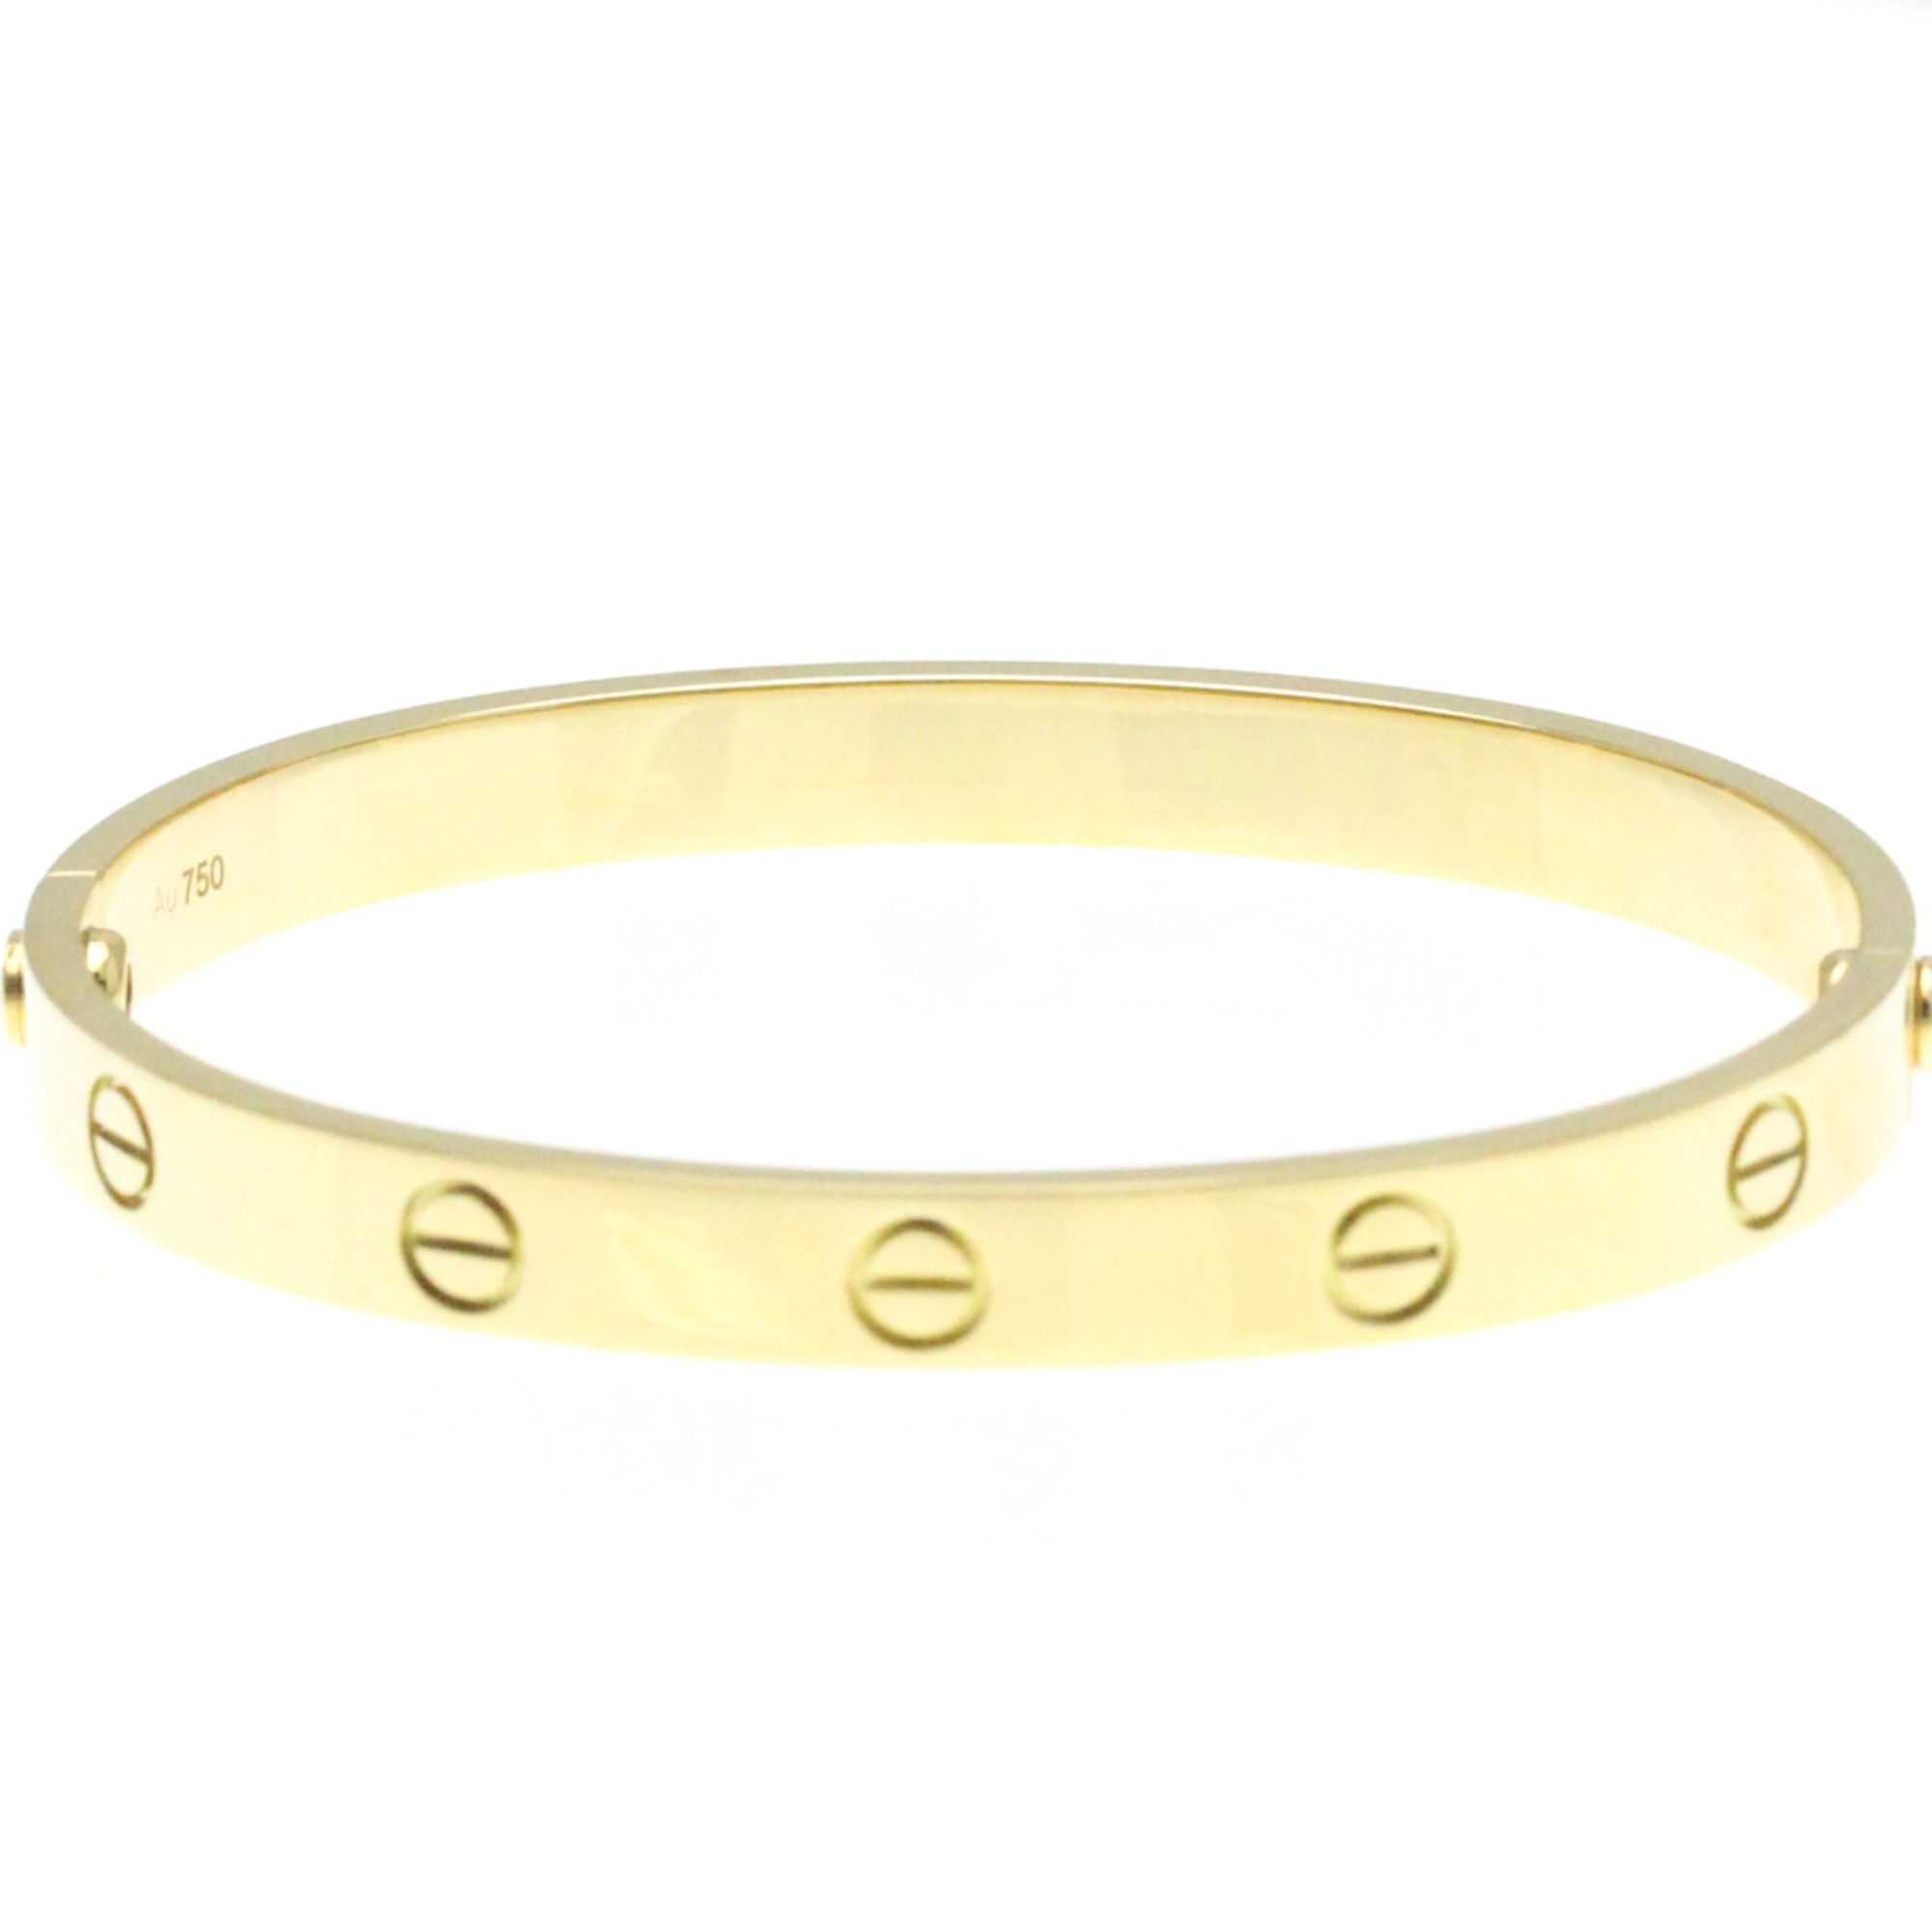 Cartier Love Bracelet Yellow Gold (18K) No Stone Bangle Gold